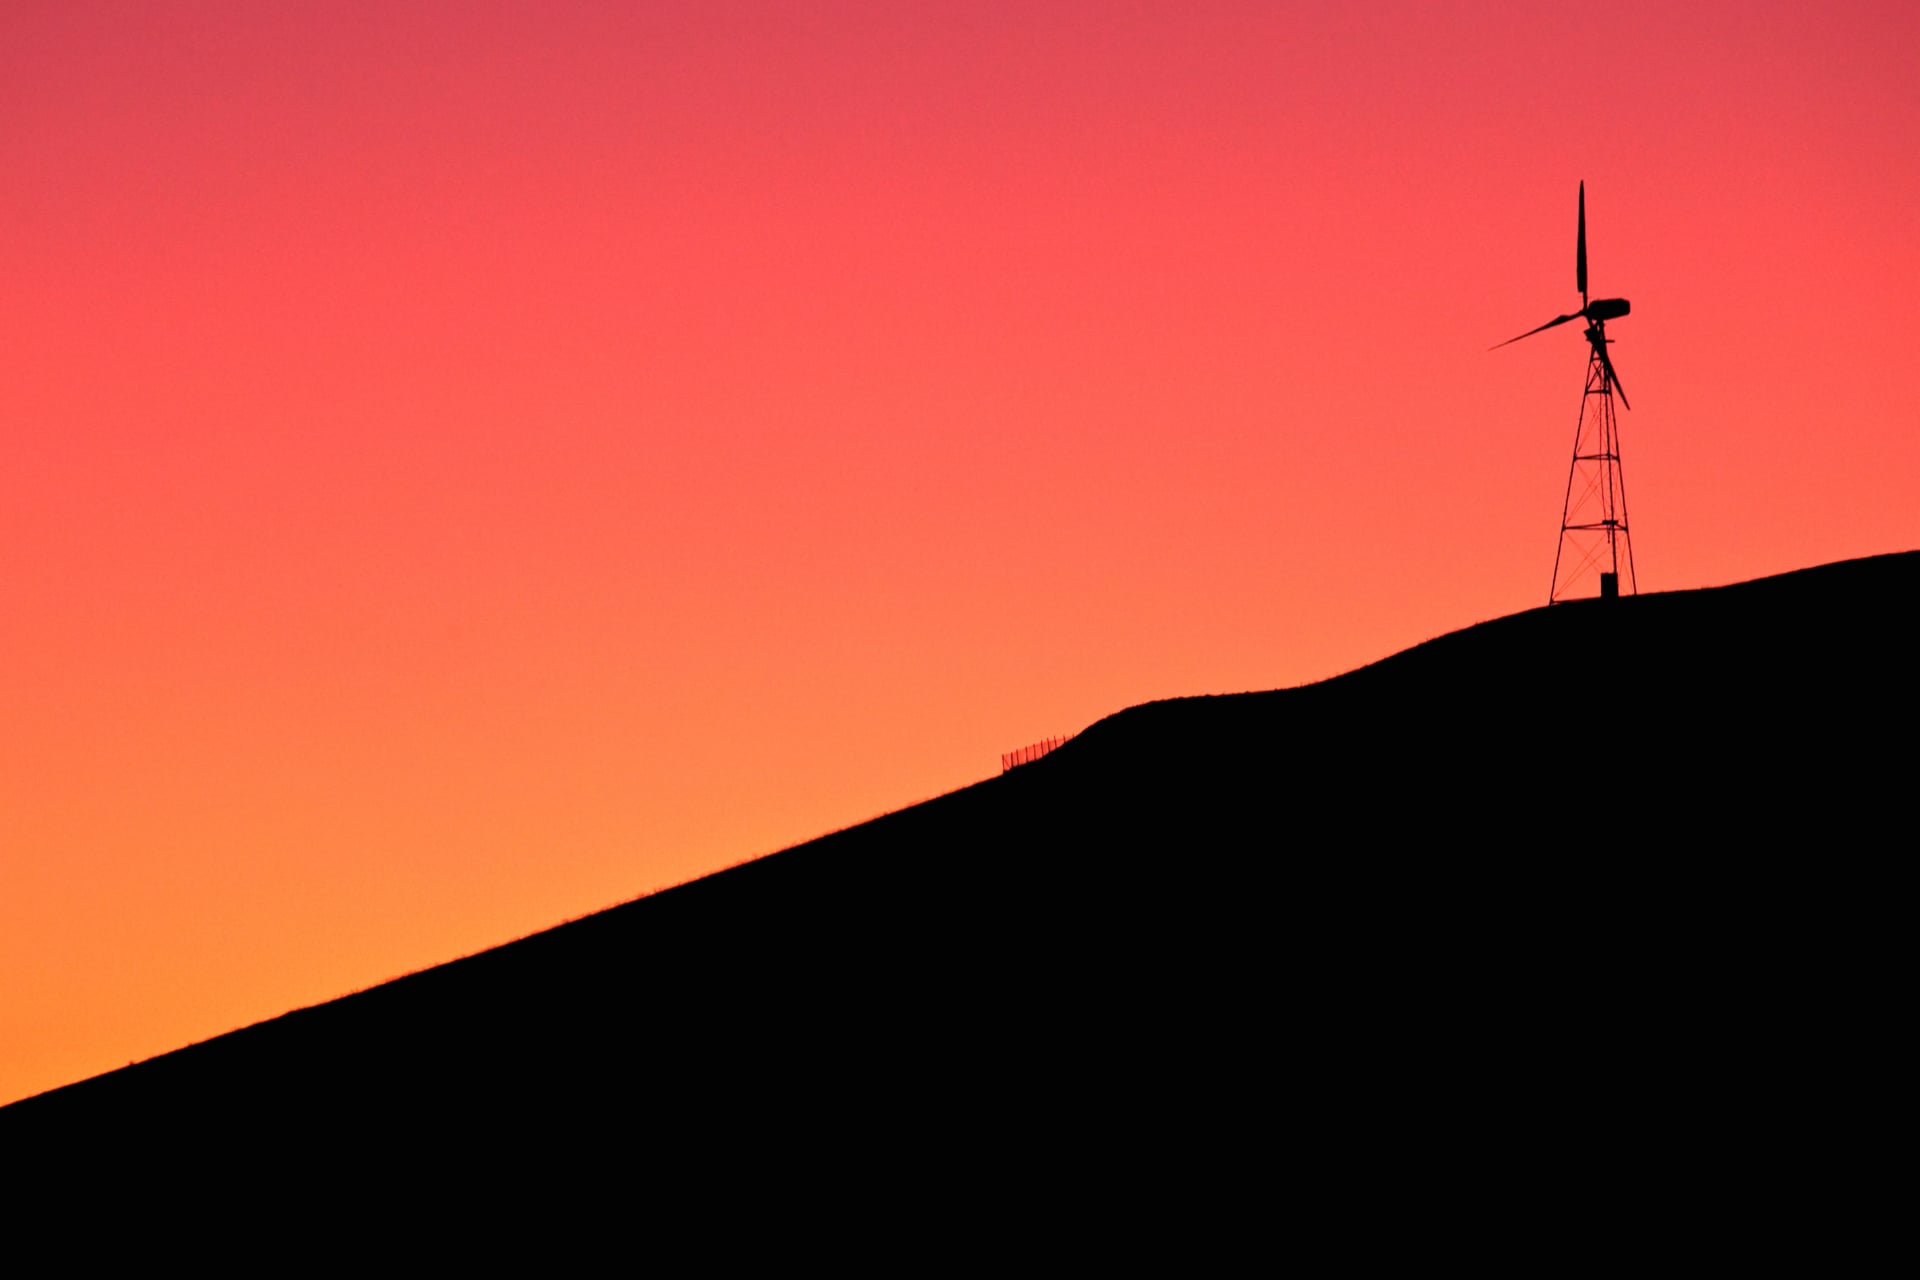 Digital Art Windmill at 640 x 960 iPhone 4 size wallpapers HD quality